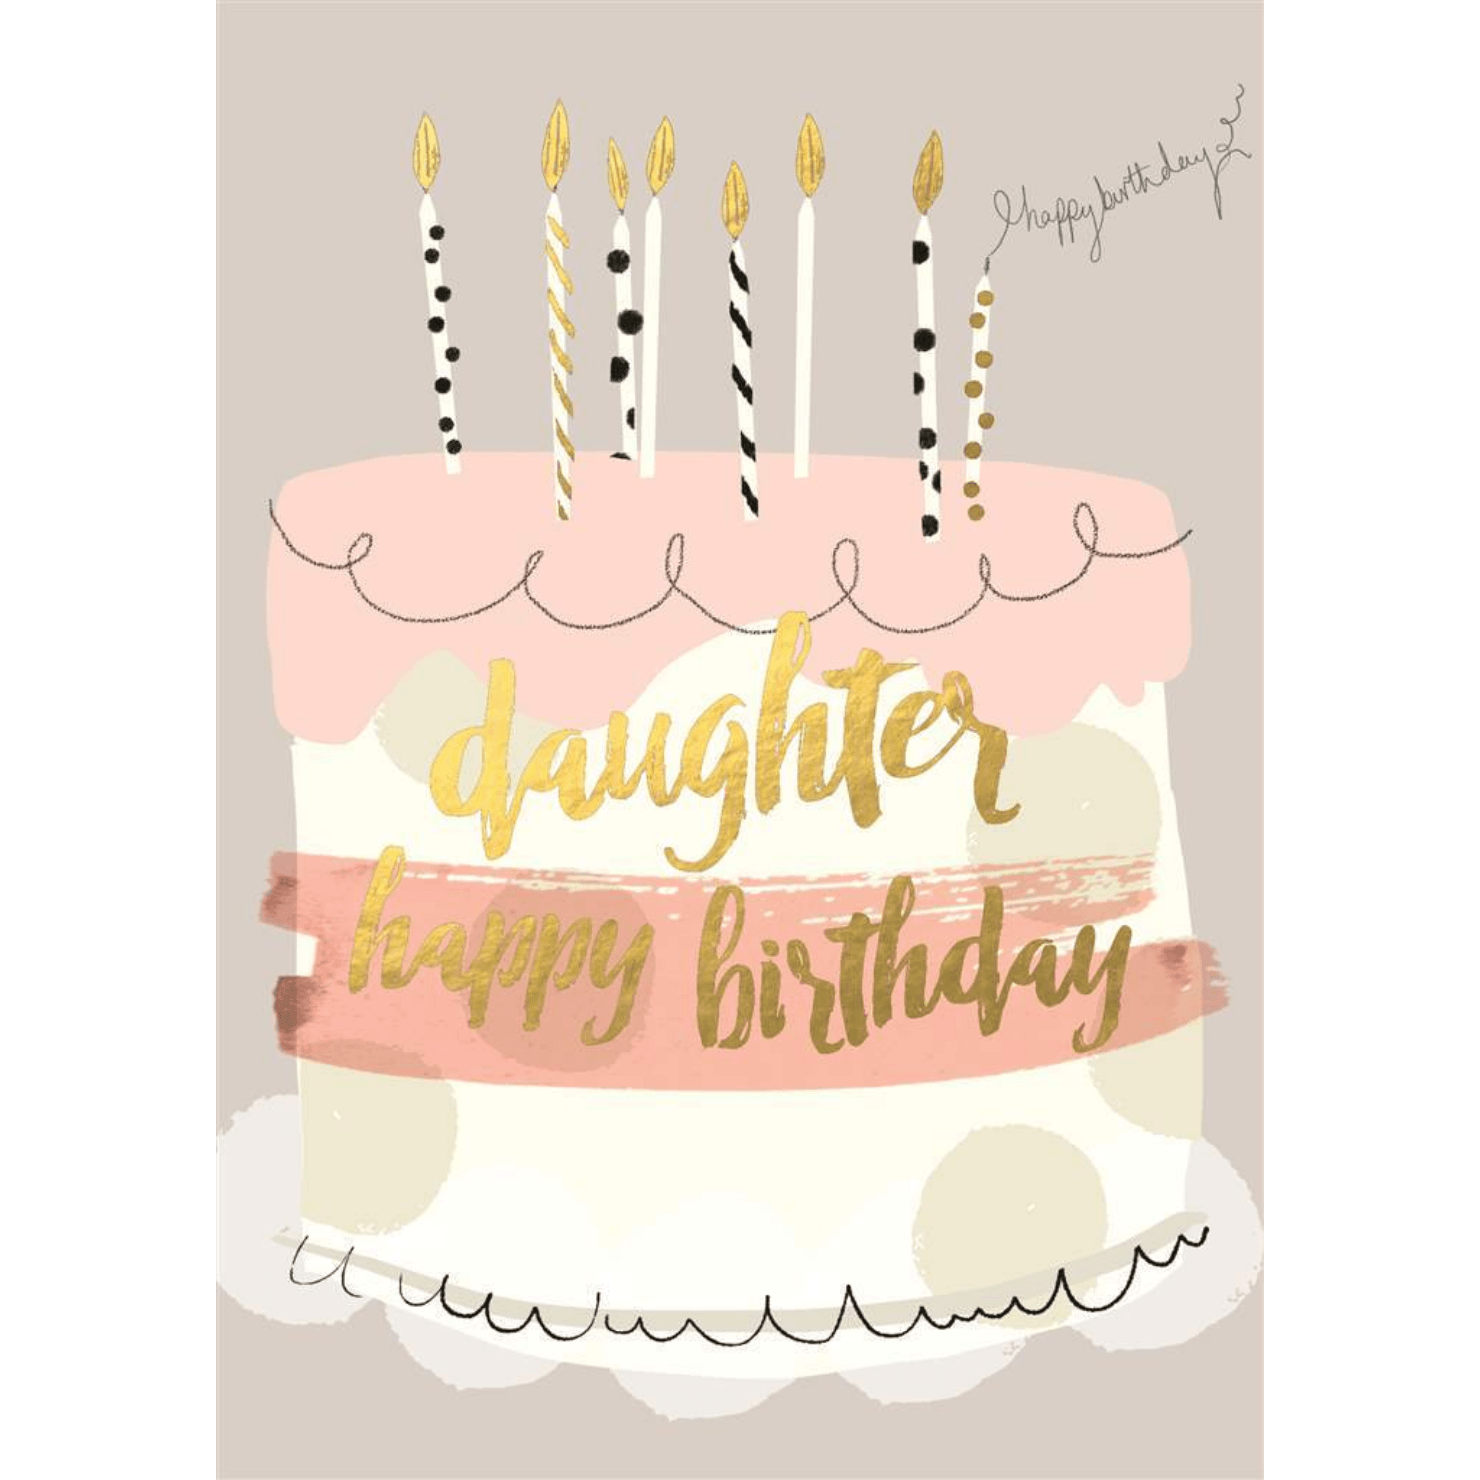 Daughter, Happy Birthday - Greeting Card - Birthday